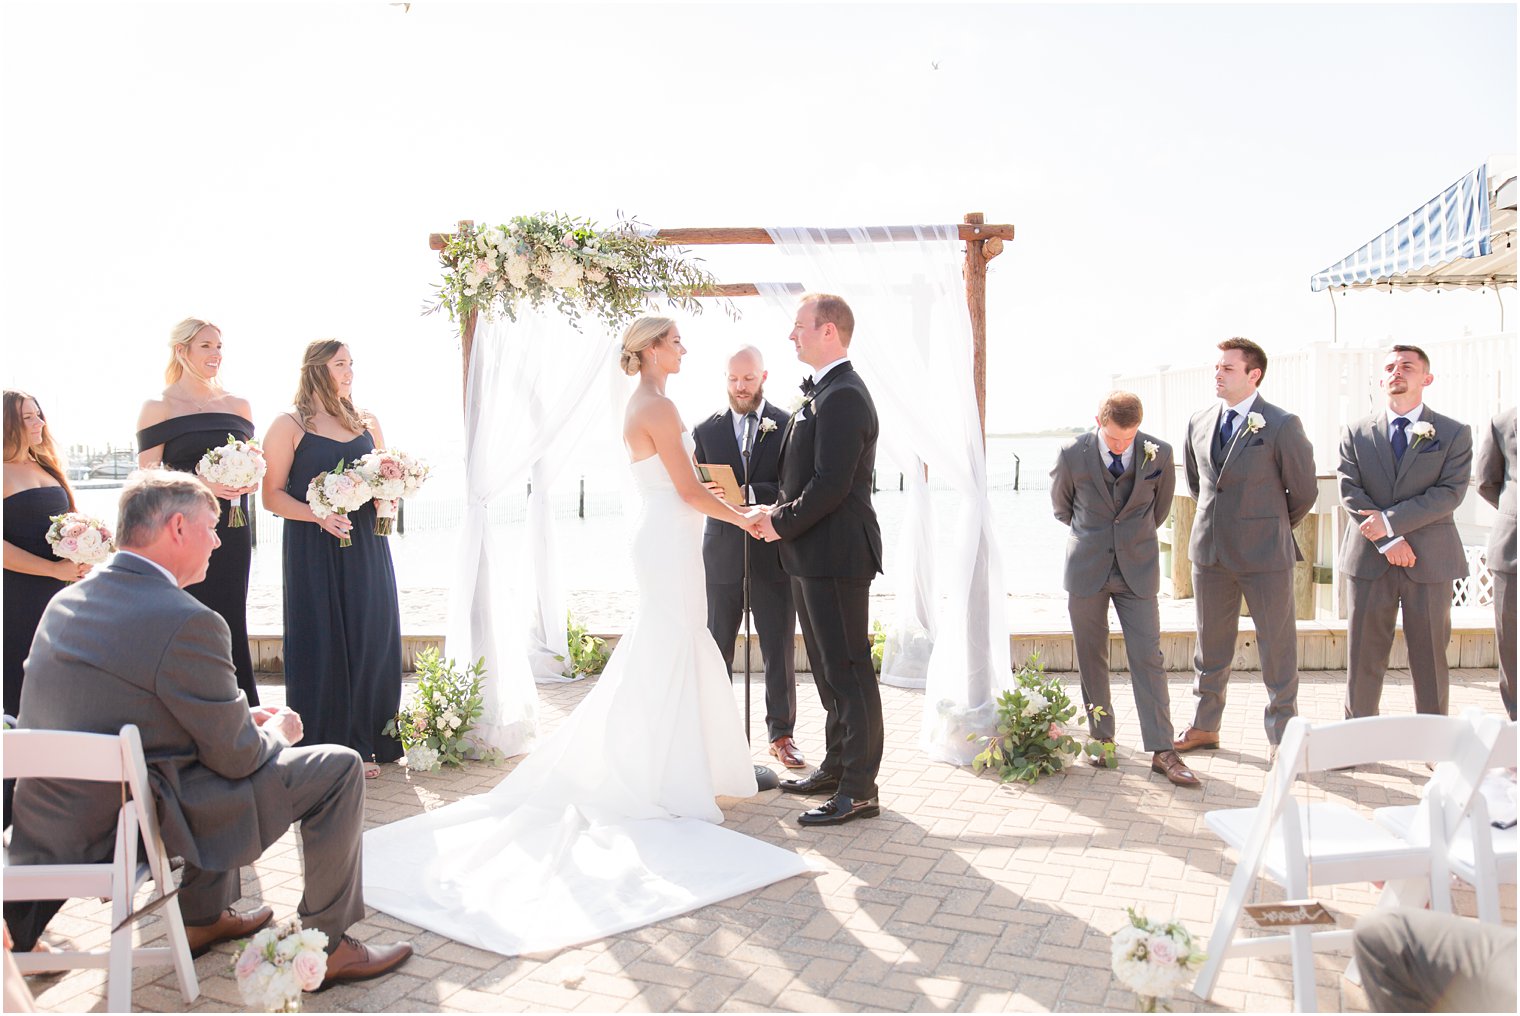 Outdoor wedding ceremony at Brant Beach Yacht Club